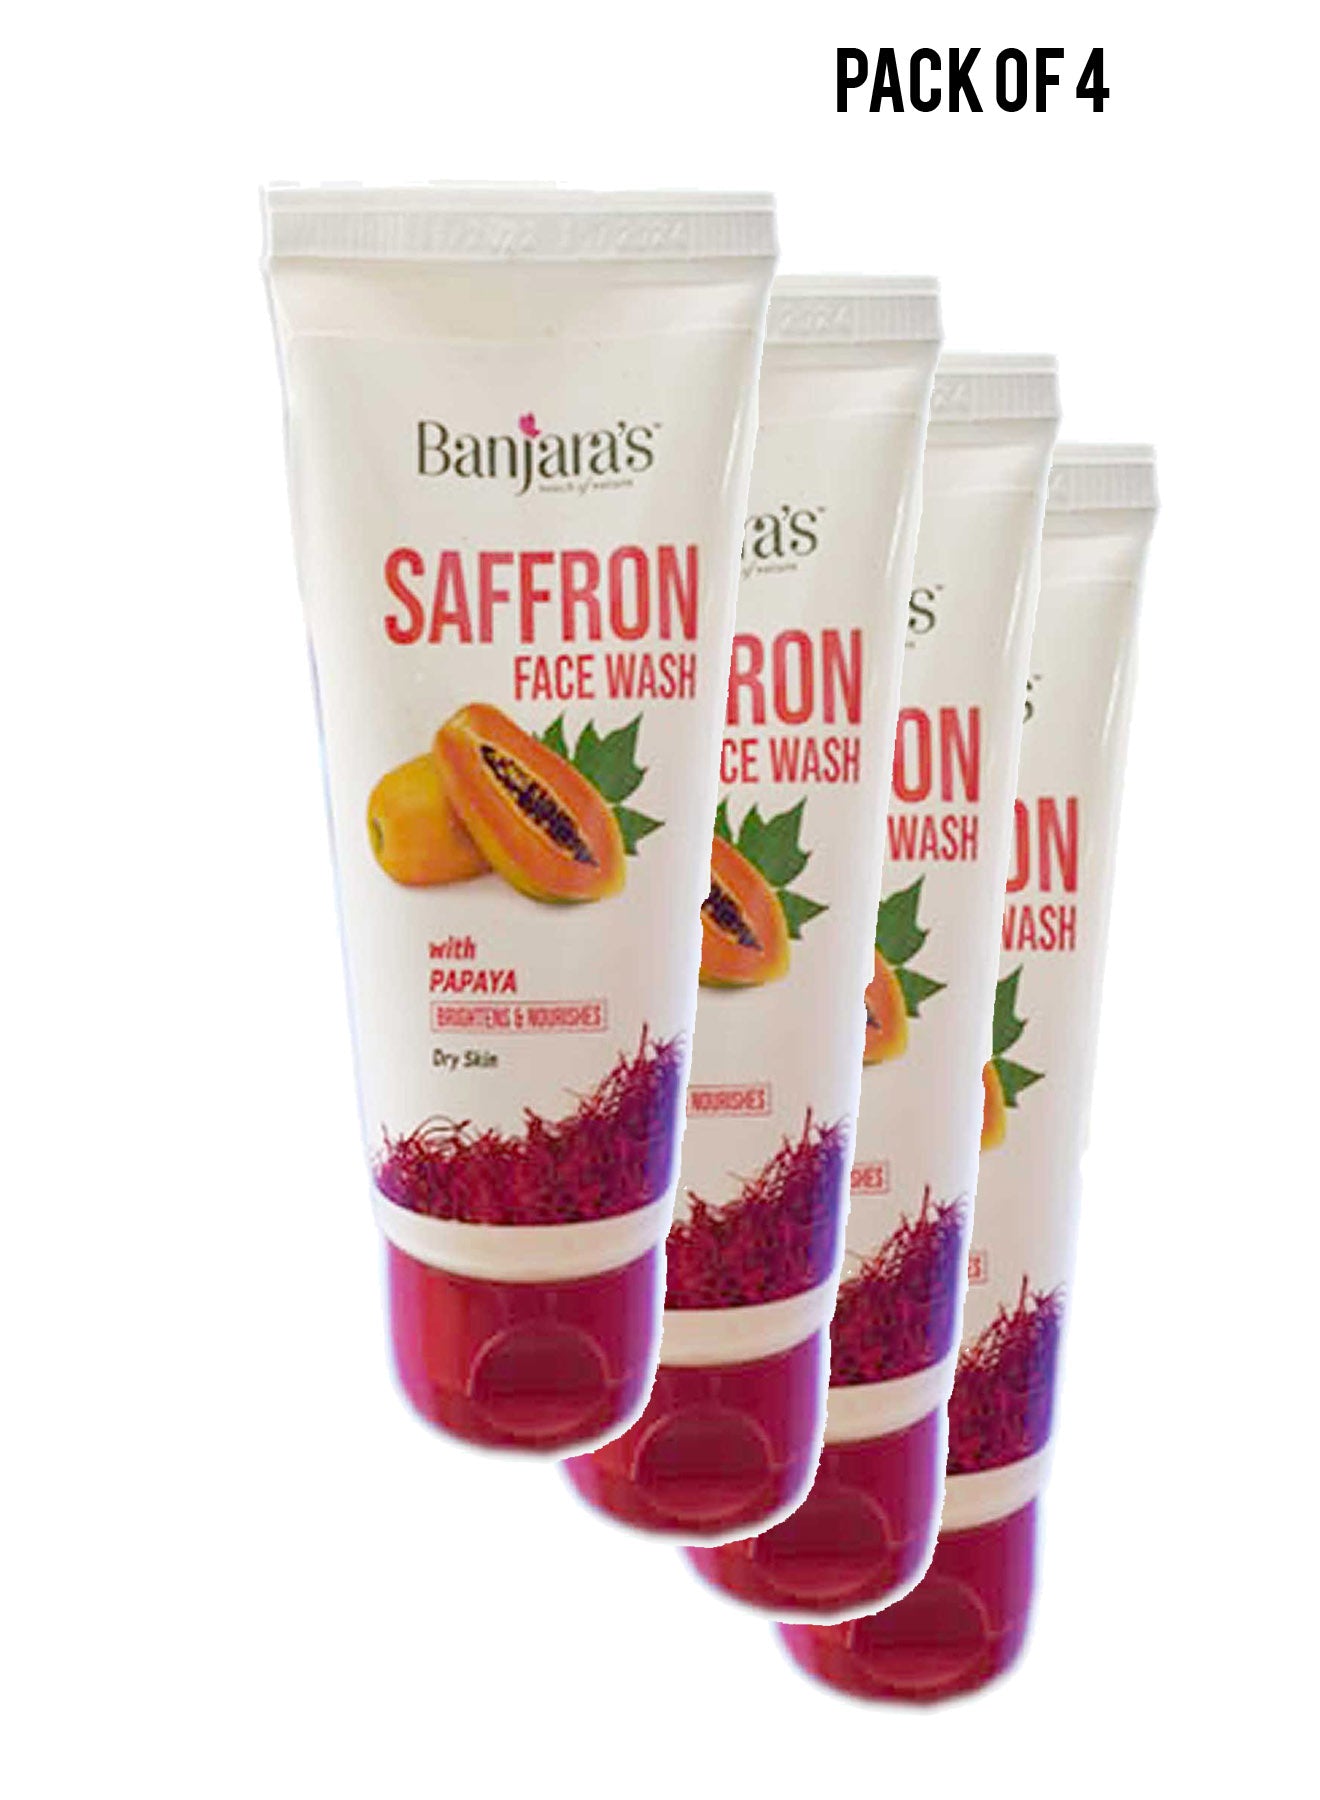 Banjaras Saffron Face wash with Papaya 50ml Value Pack of 4 